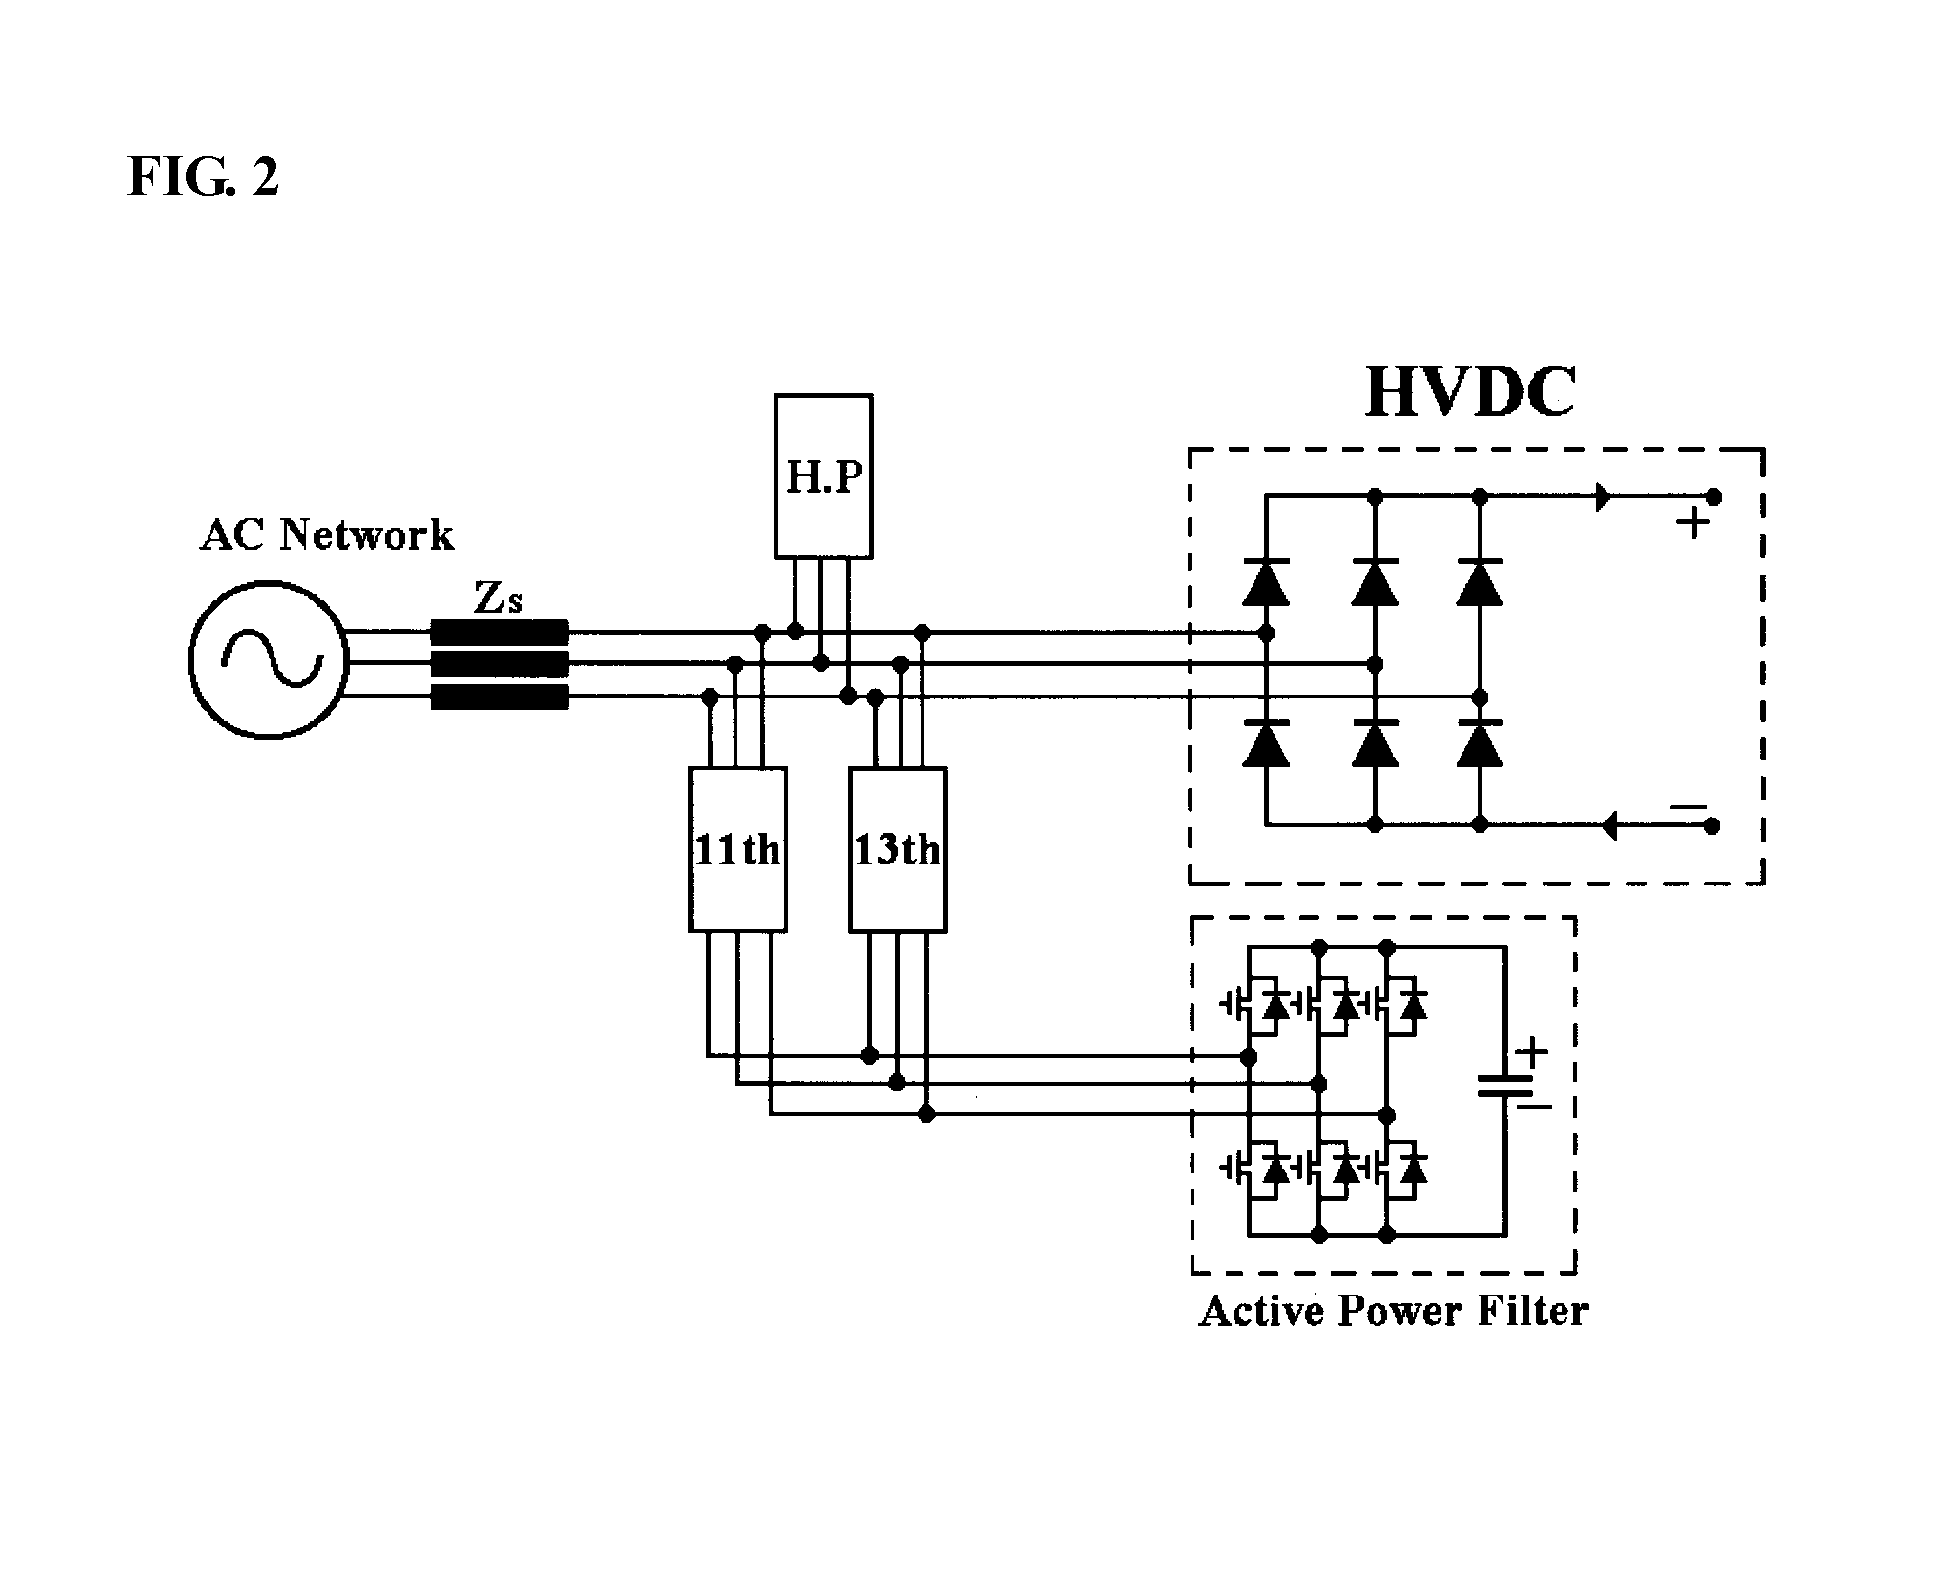 Static compensator apparatus for HVDC system